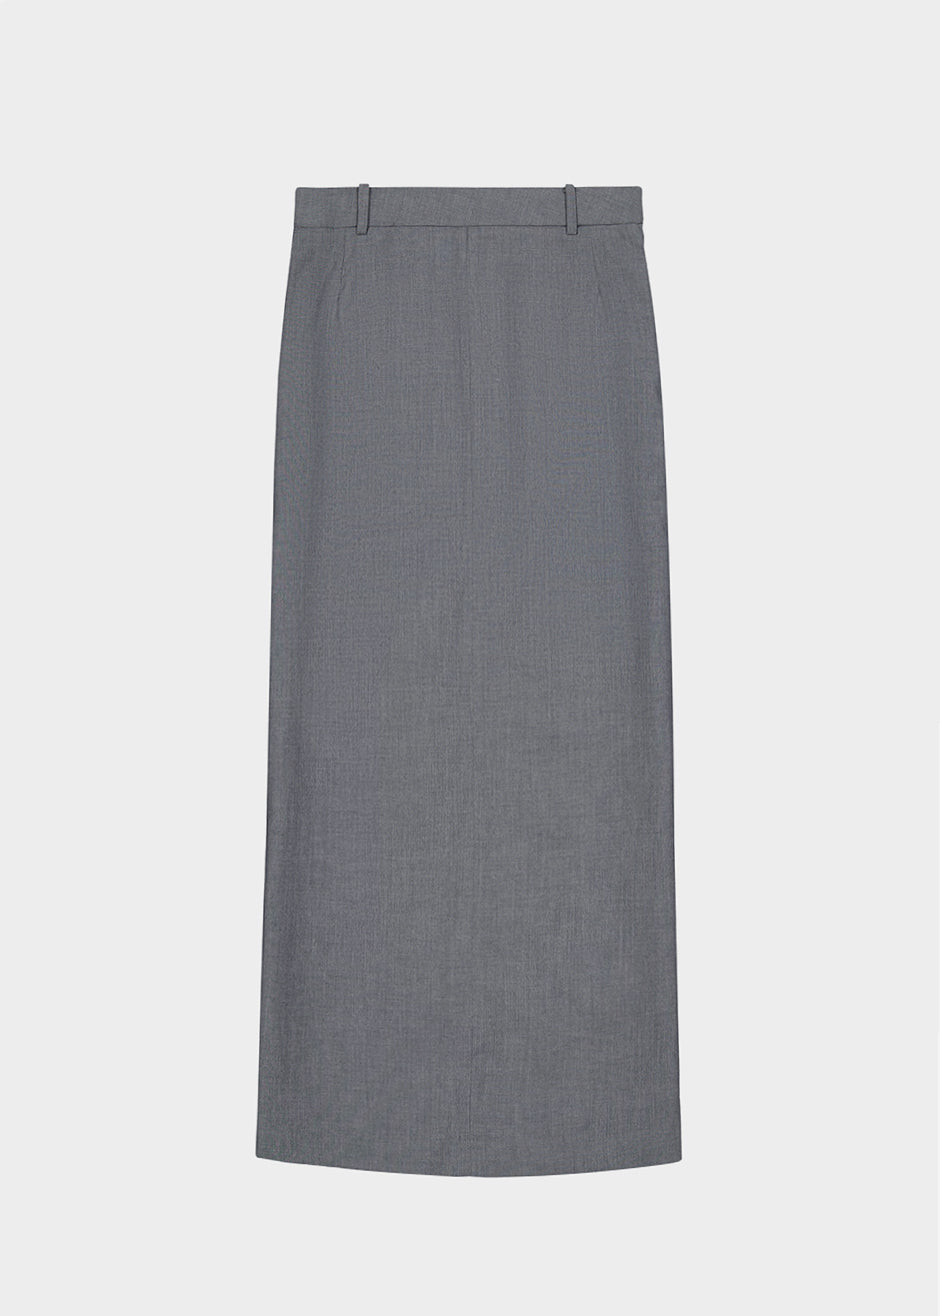 Eli Pencil Skirt - Charcoal - 13